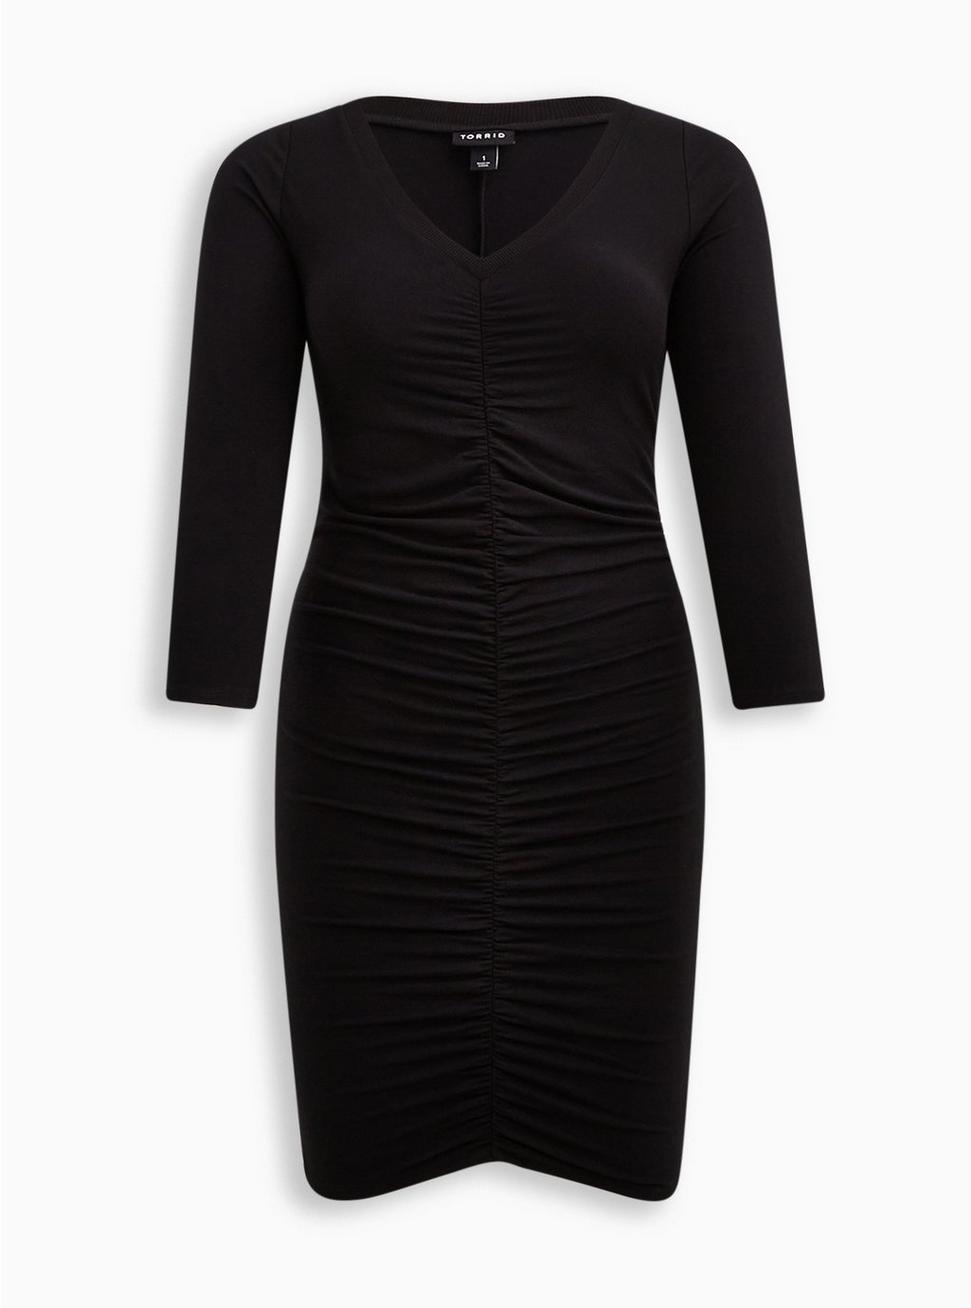 Plus Size Mini Jersey Bodycon Dress, DEEP BLACK, hi-res